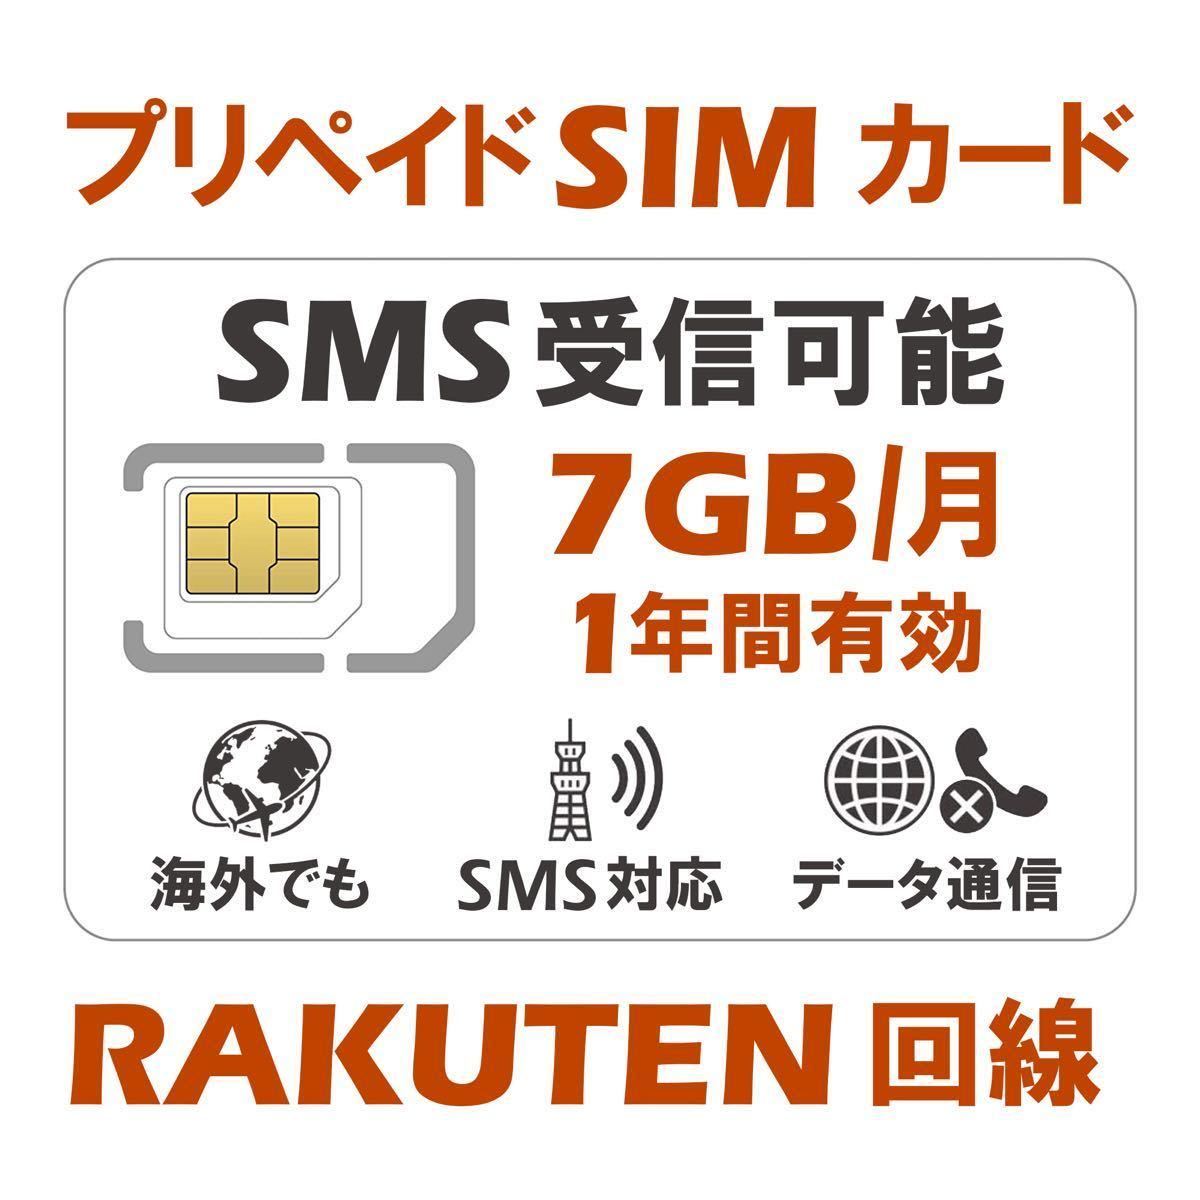 RAKUTEN回線 国内海外 プリペイドSIM 7GB/月1年間有効 5G/4G